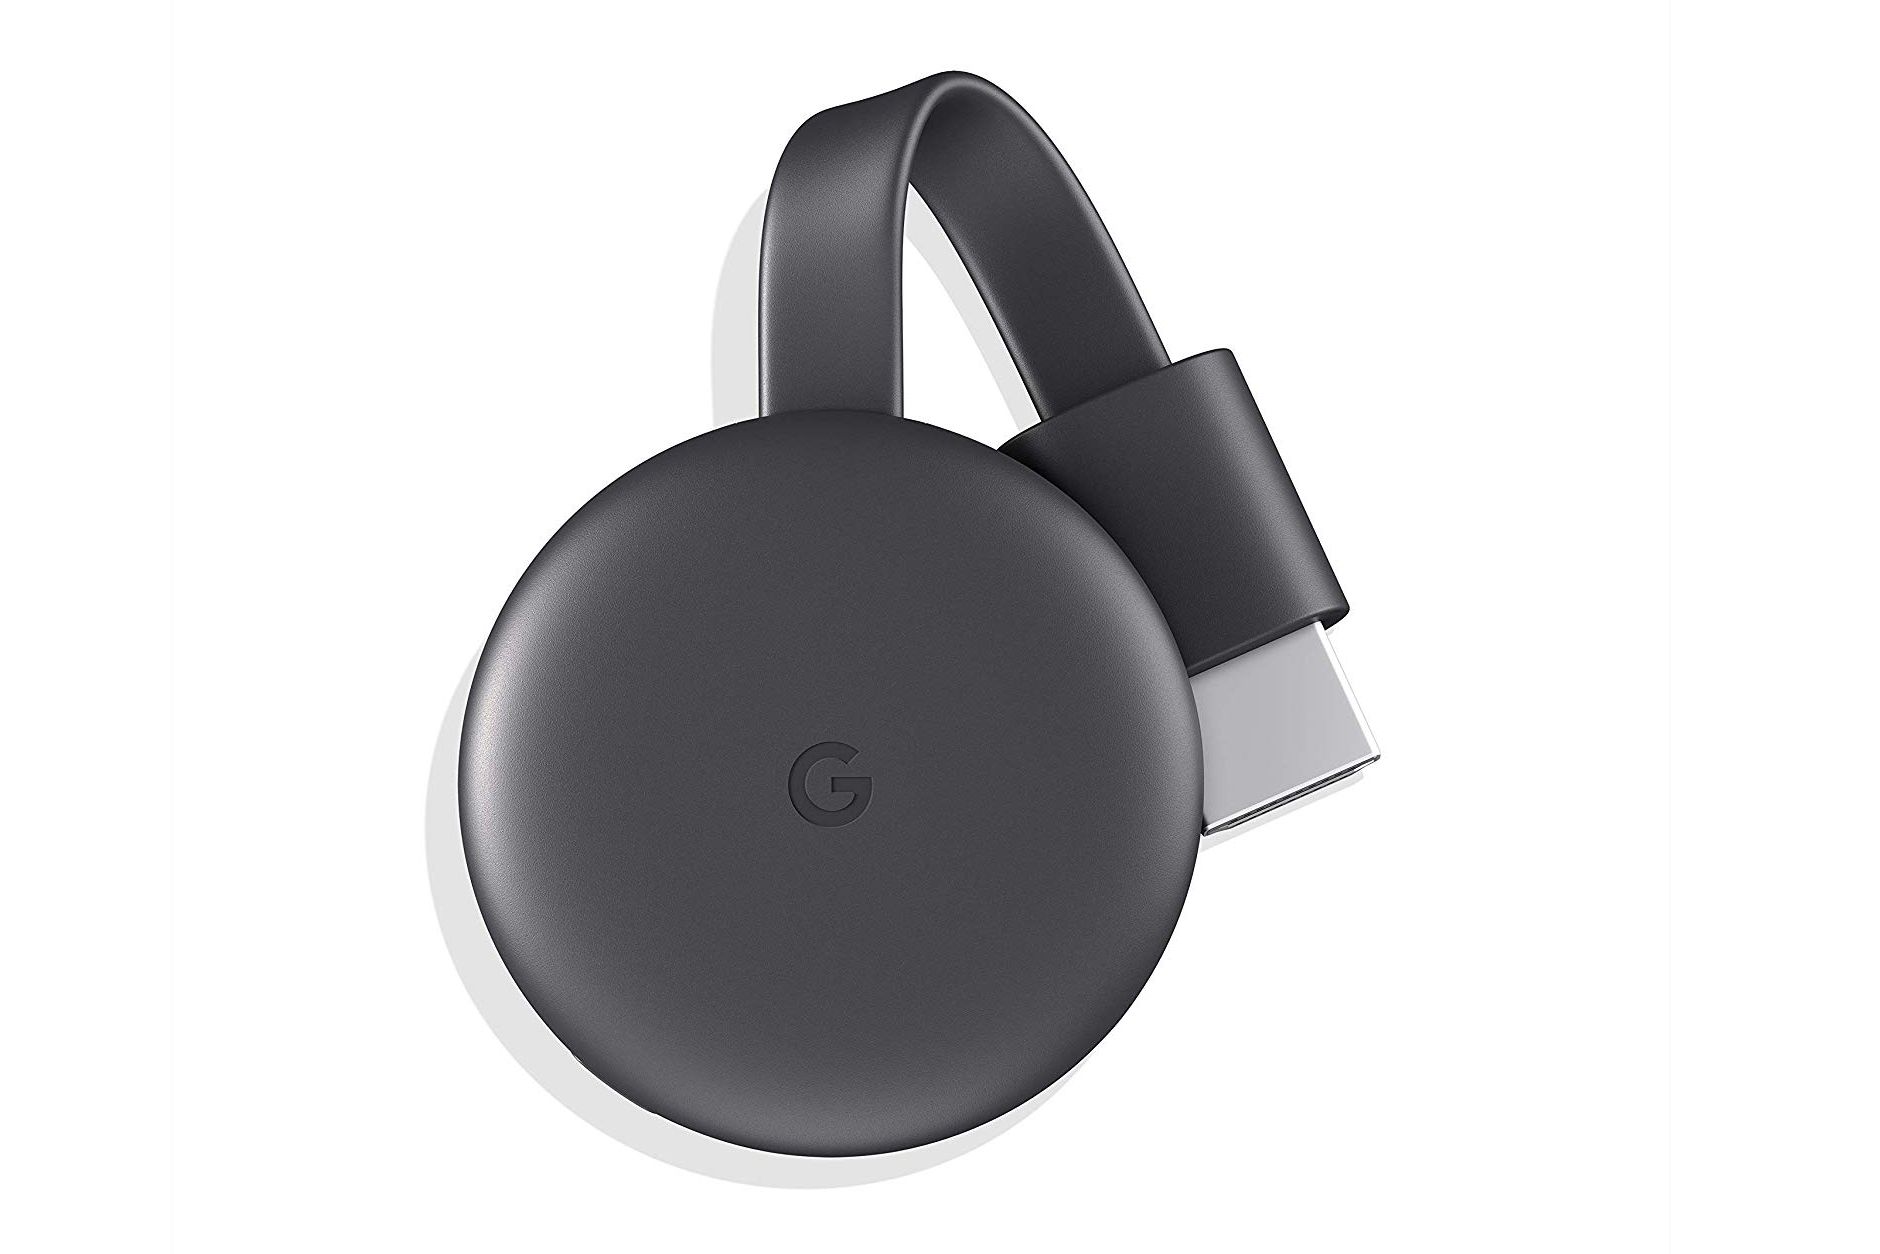 Google Chromecast 3rd Generation